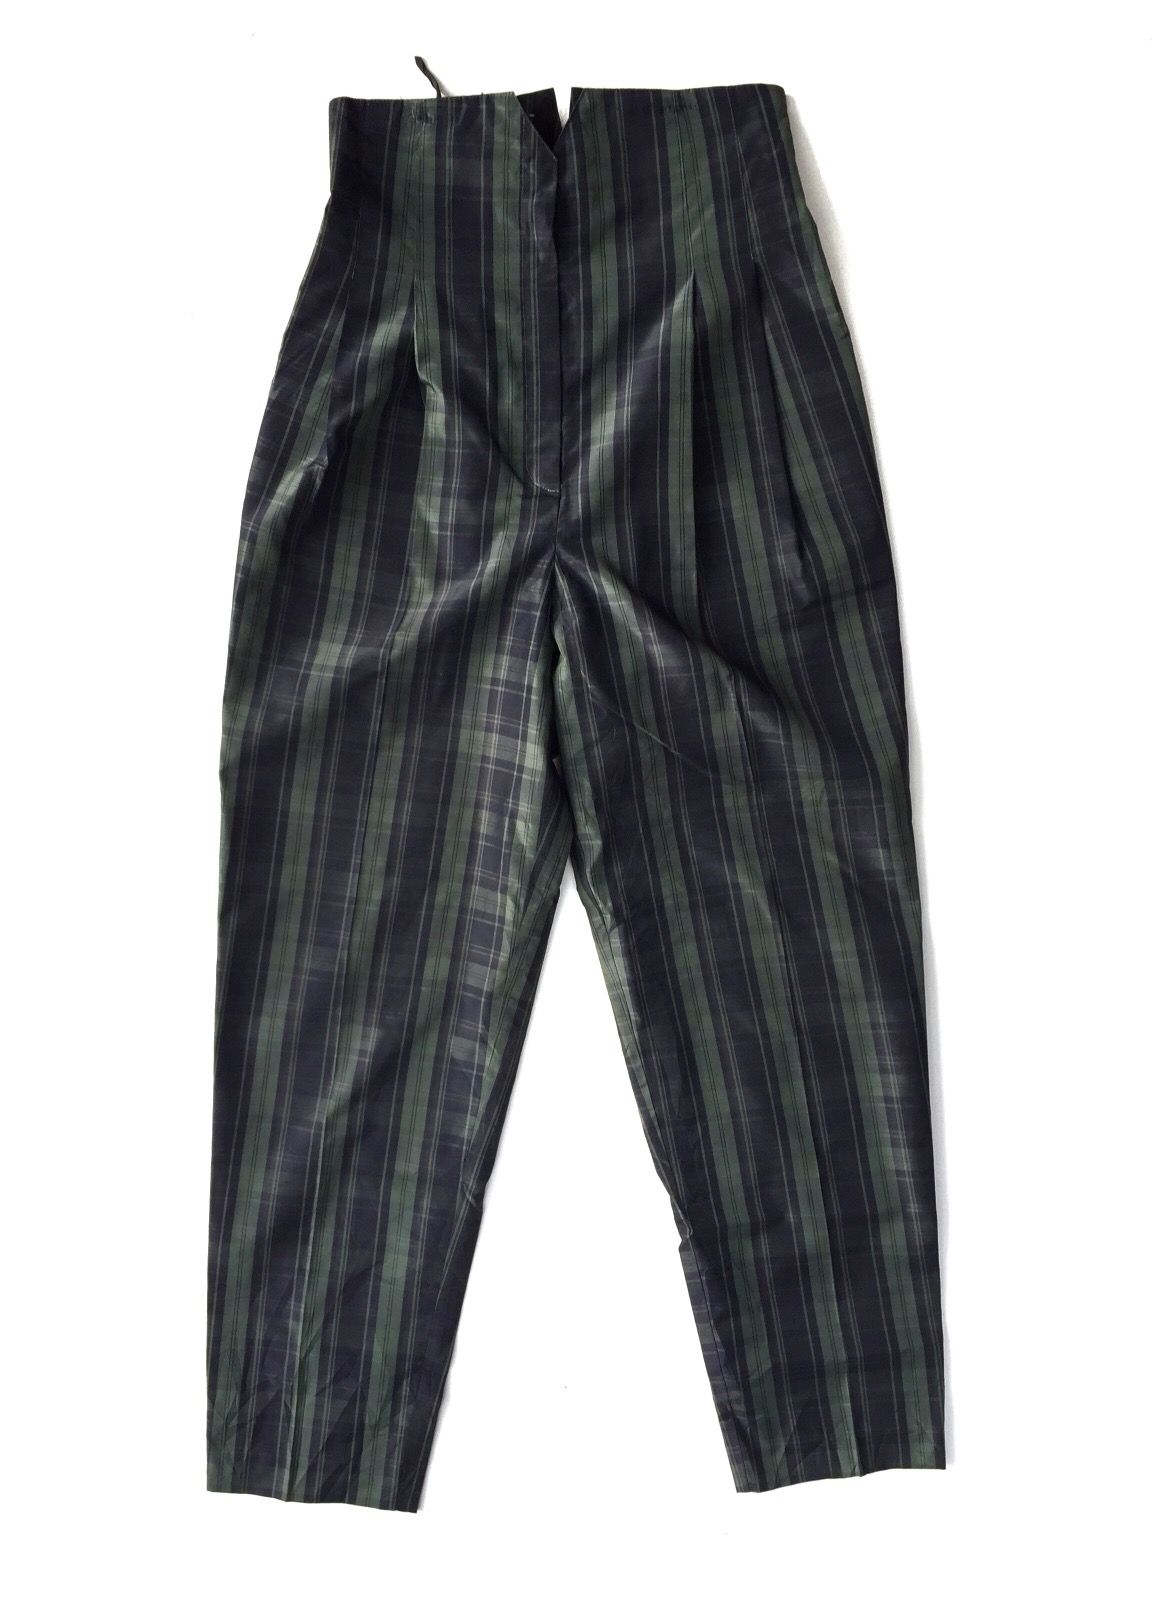 Vintage Vintage Norma Kamali Checkered High Waist Pants Size US 26 / EU 42 - 1 Preview